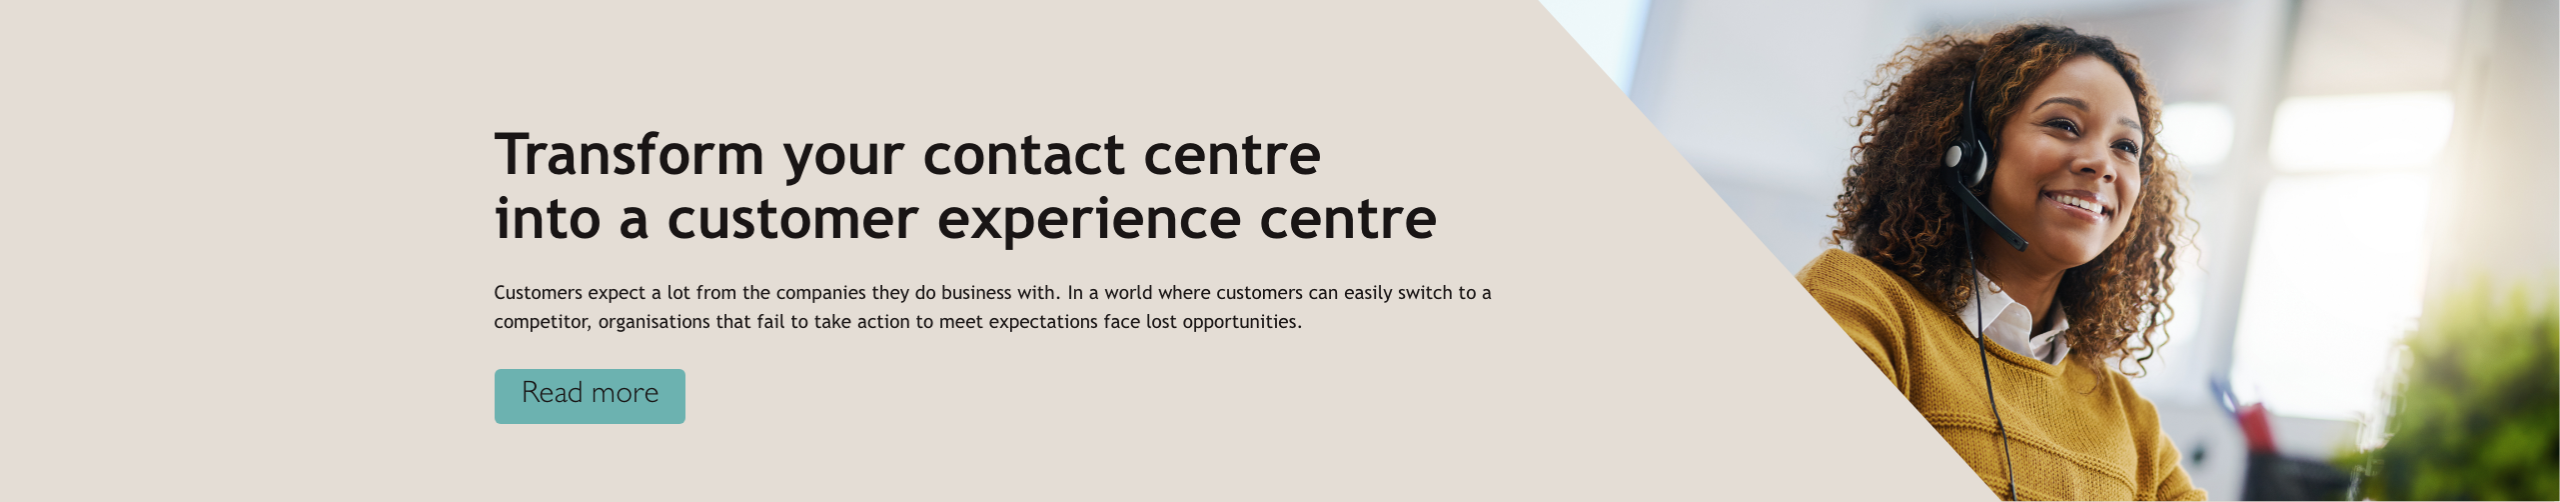 Transform your contact centre into a customer experience centre